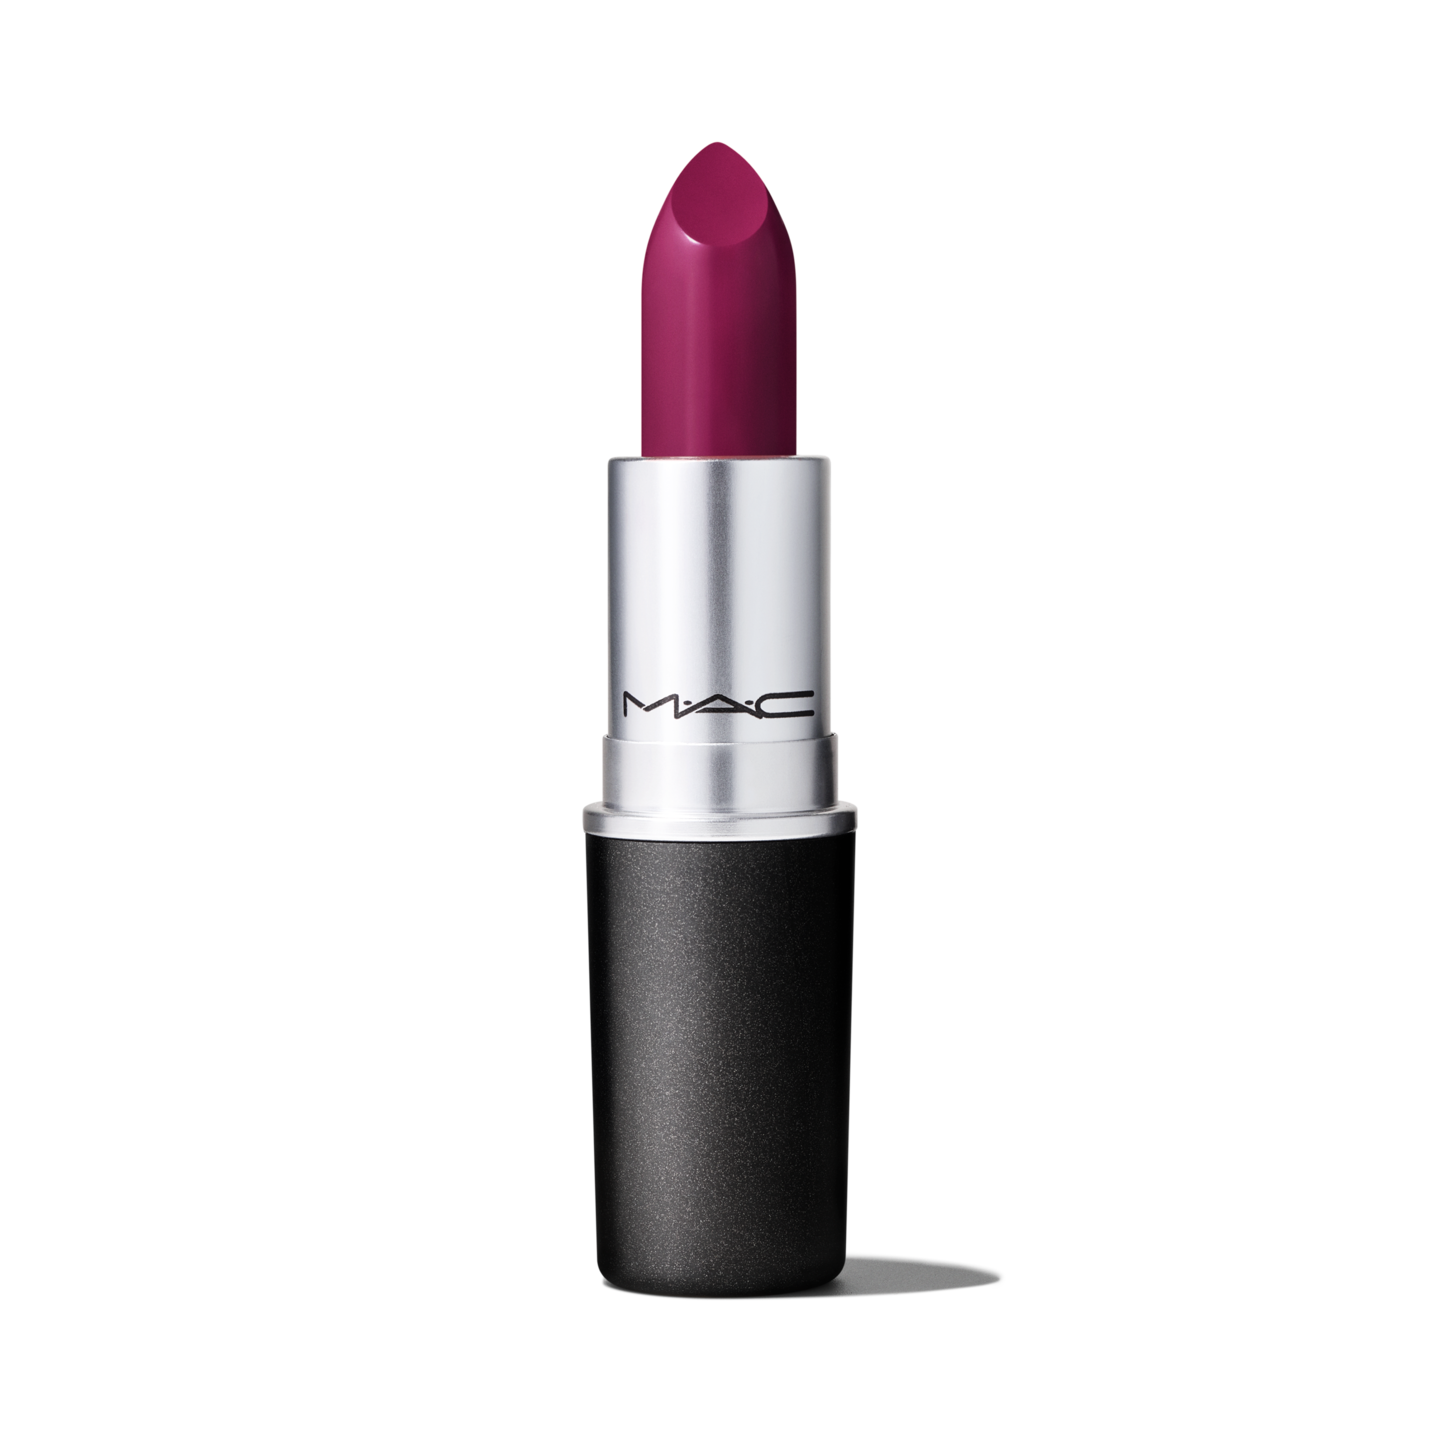 MAC Cosmetics Matte Lipstick - Honeylove - Reviews